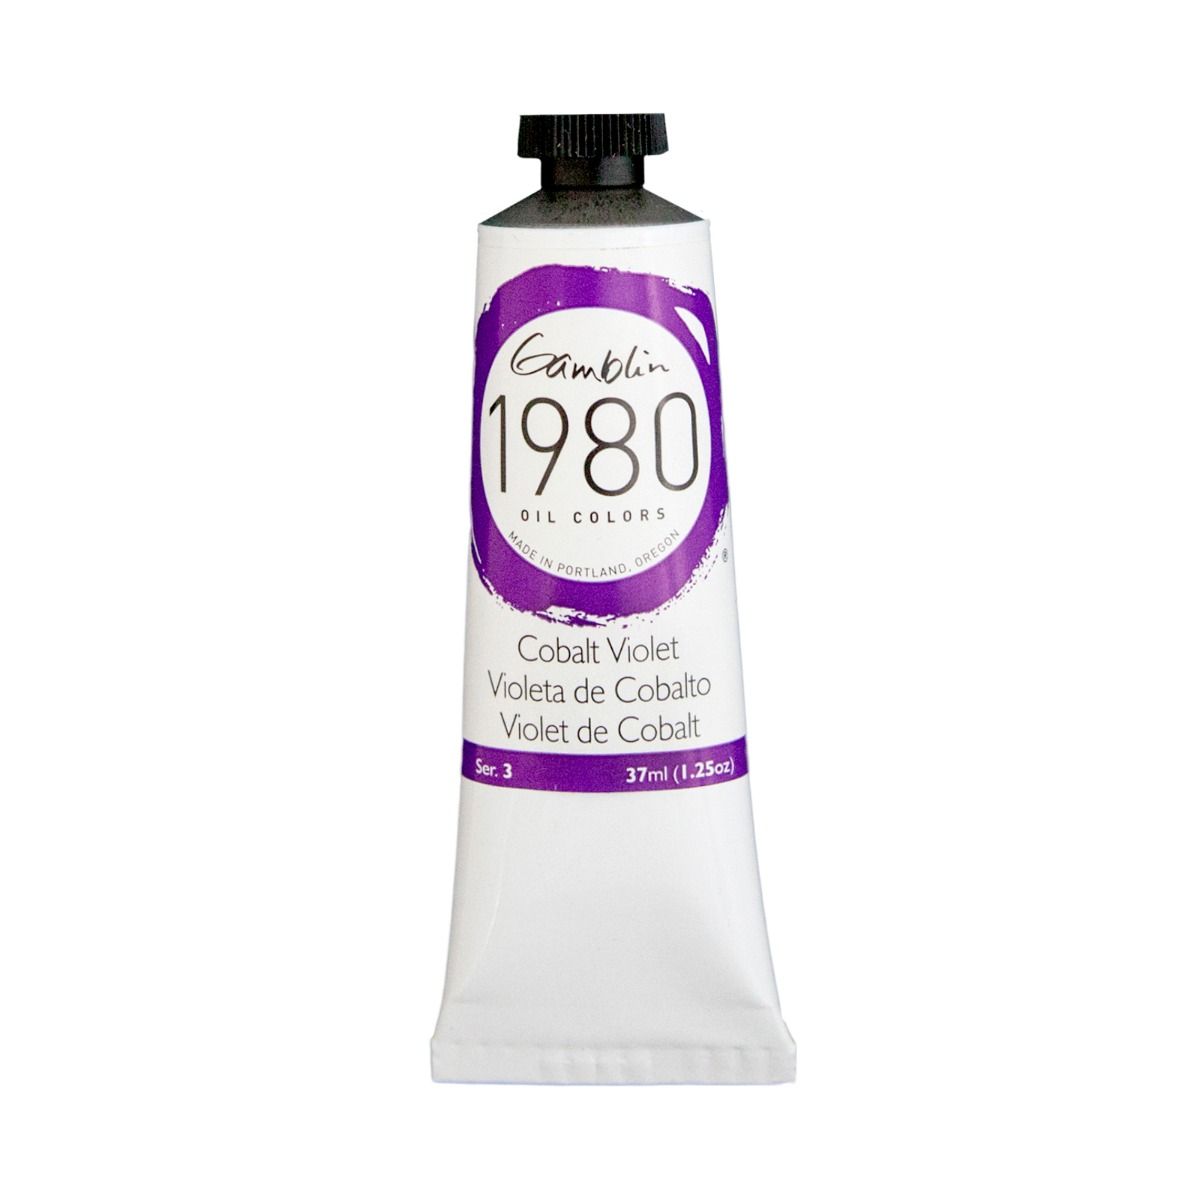 Gamblin 1980 Oils - Cobalt Violet, 37 ml (1.25oz)